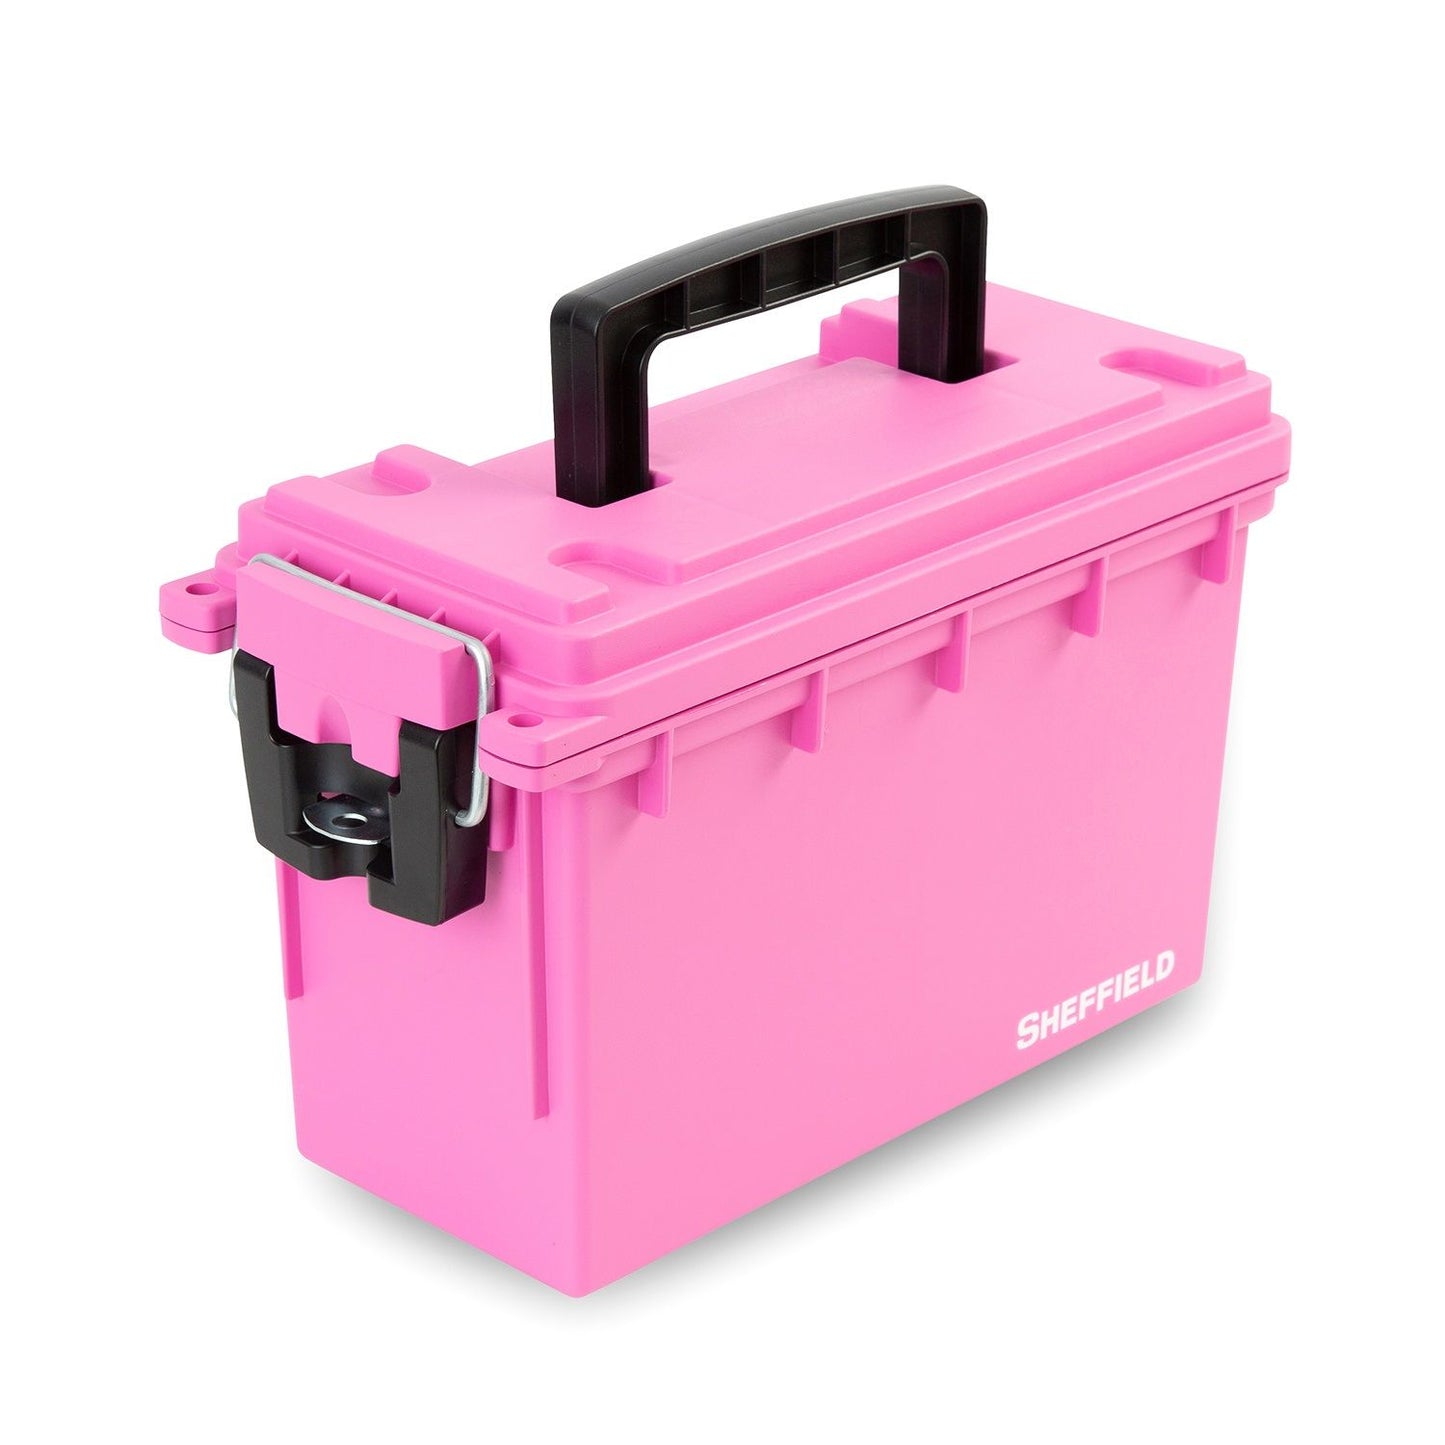 Sheffield Field Box-pink